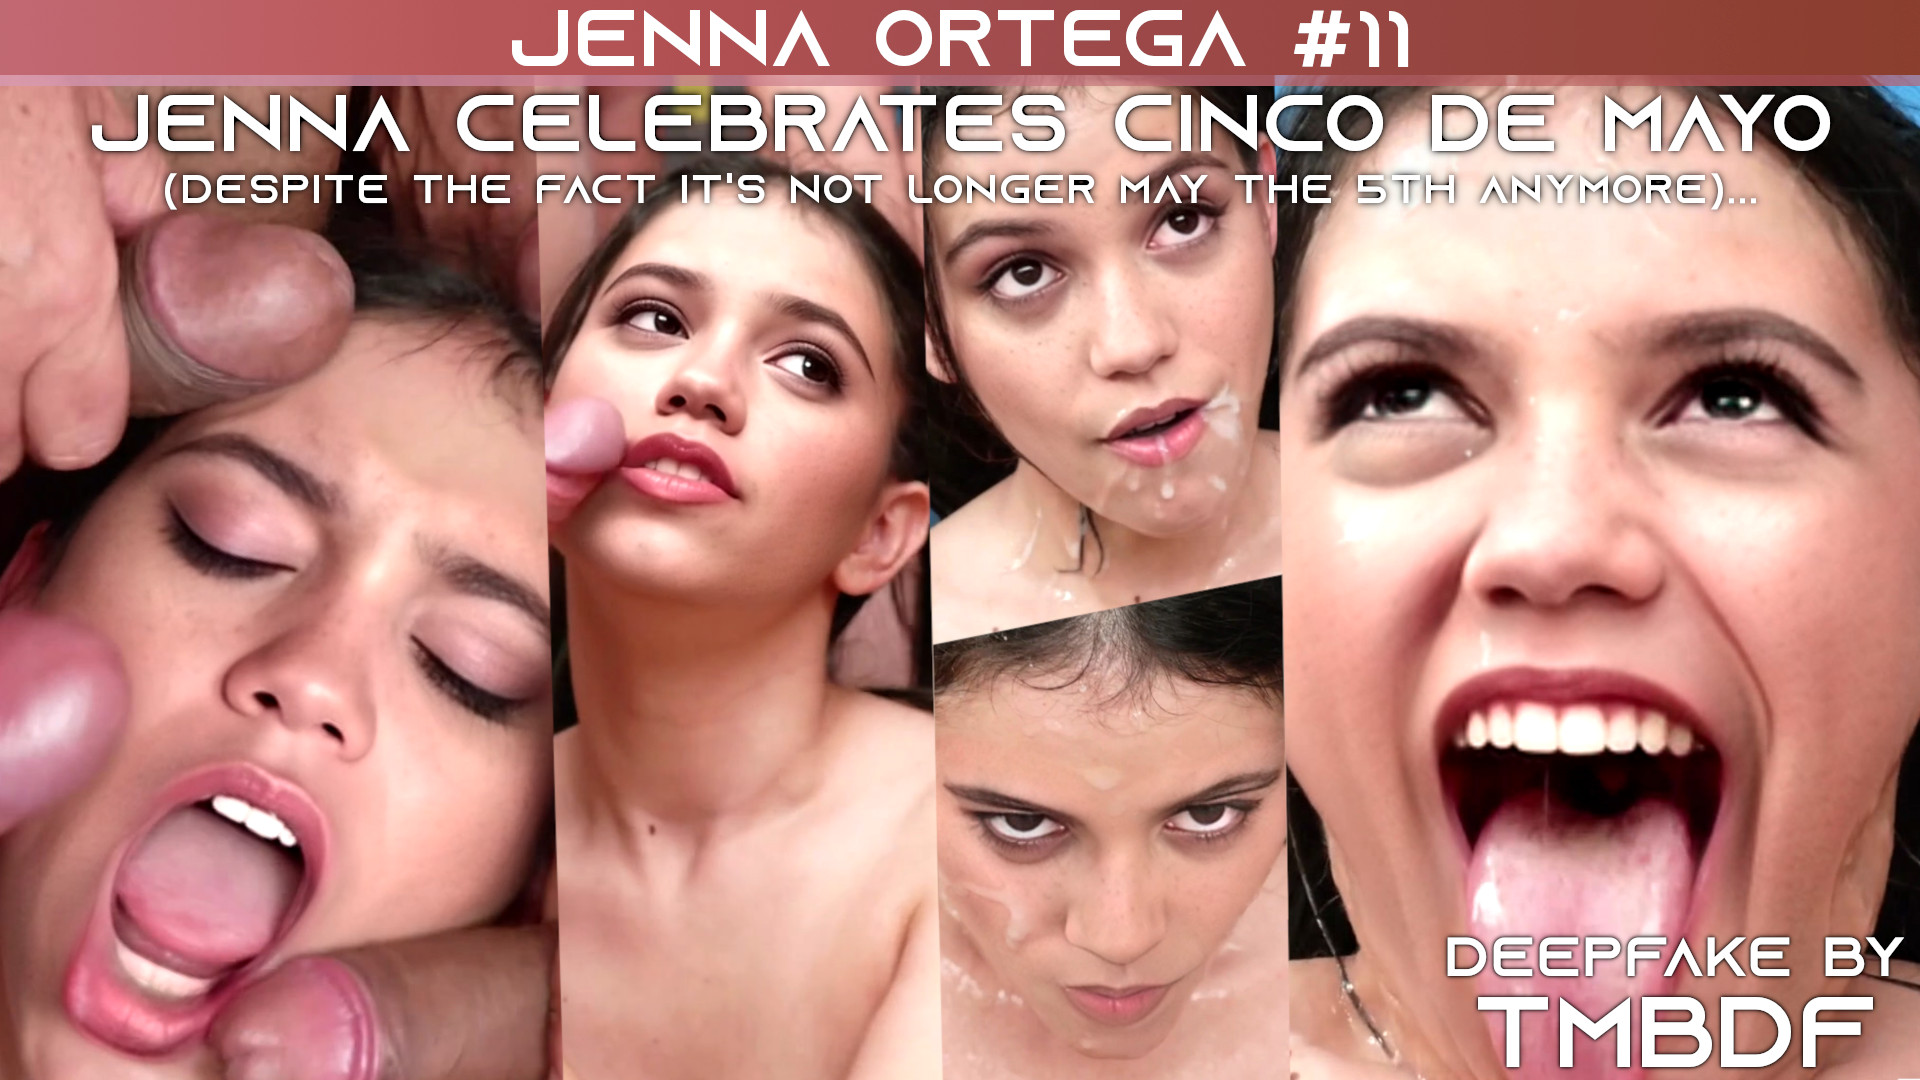 Jenna Ortega #11 - PREVIEW - Full version in video description